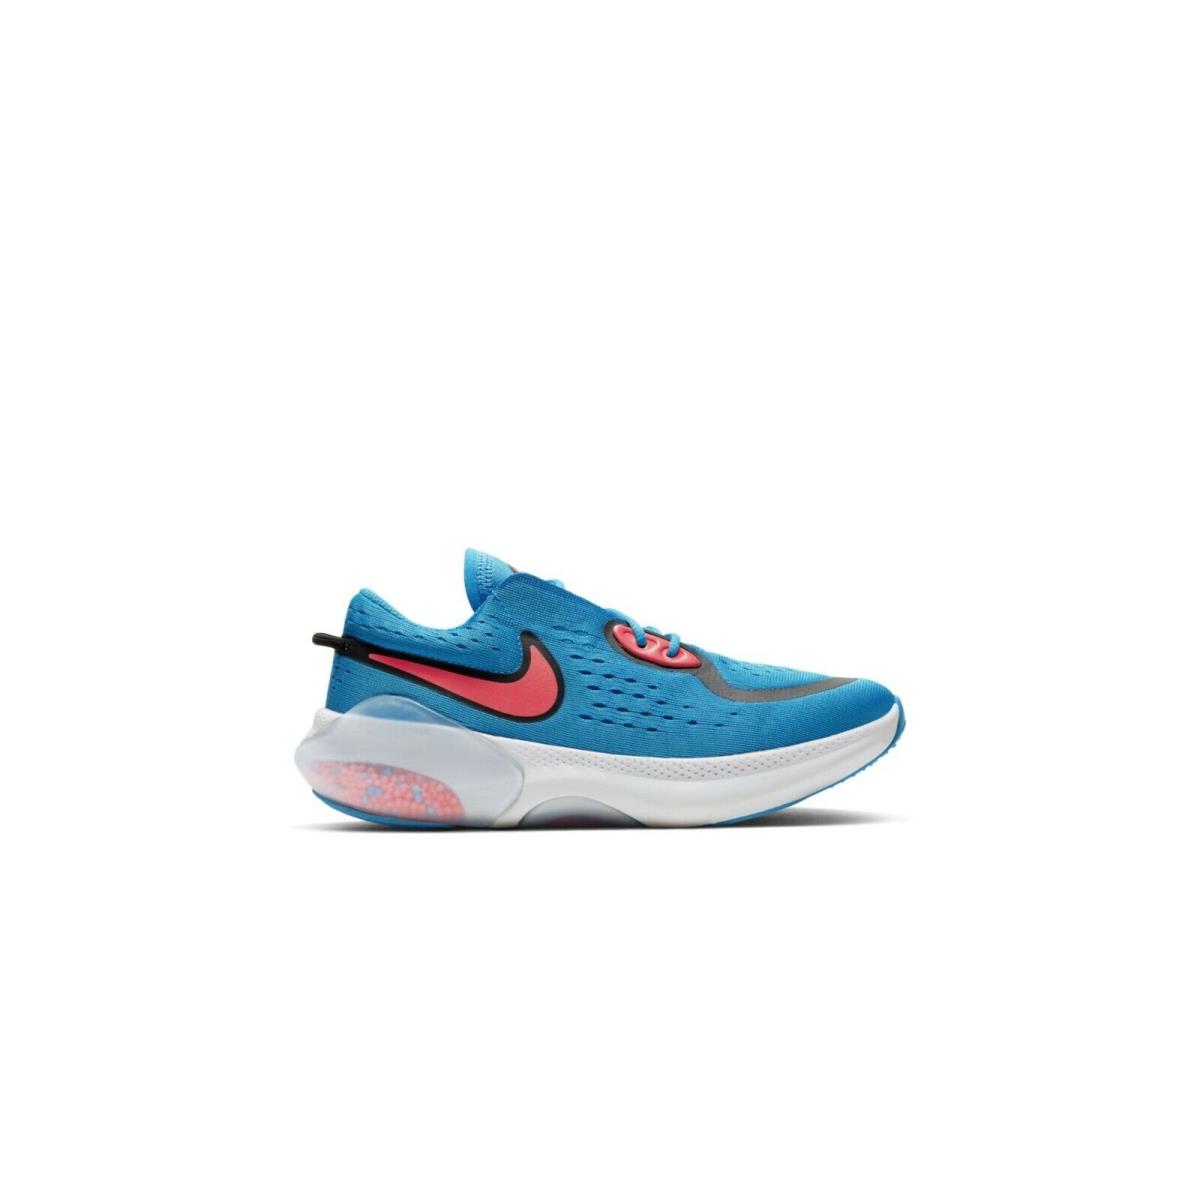 Nike Joyride Dual Run GS Kids Running Shoes CN9600 450 Size 6 Y US - aser Blue Crimson